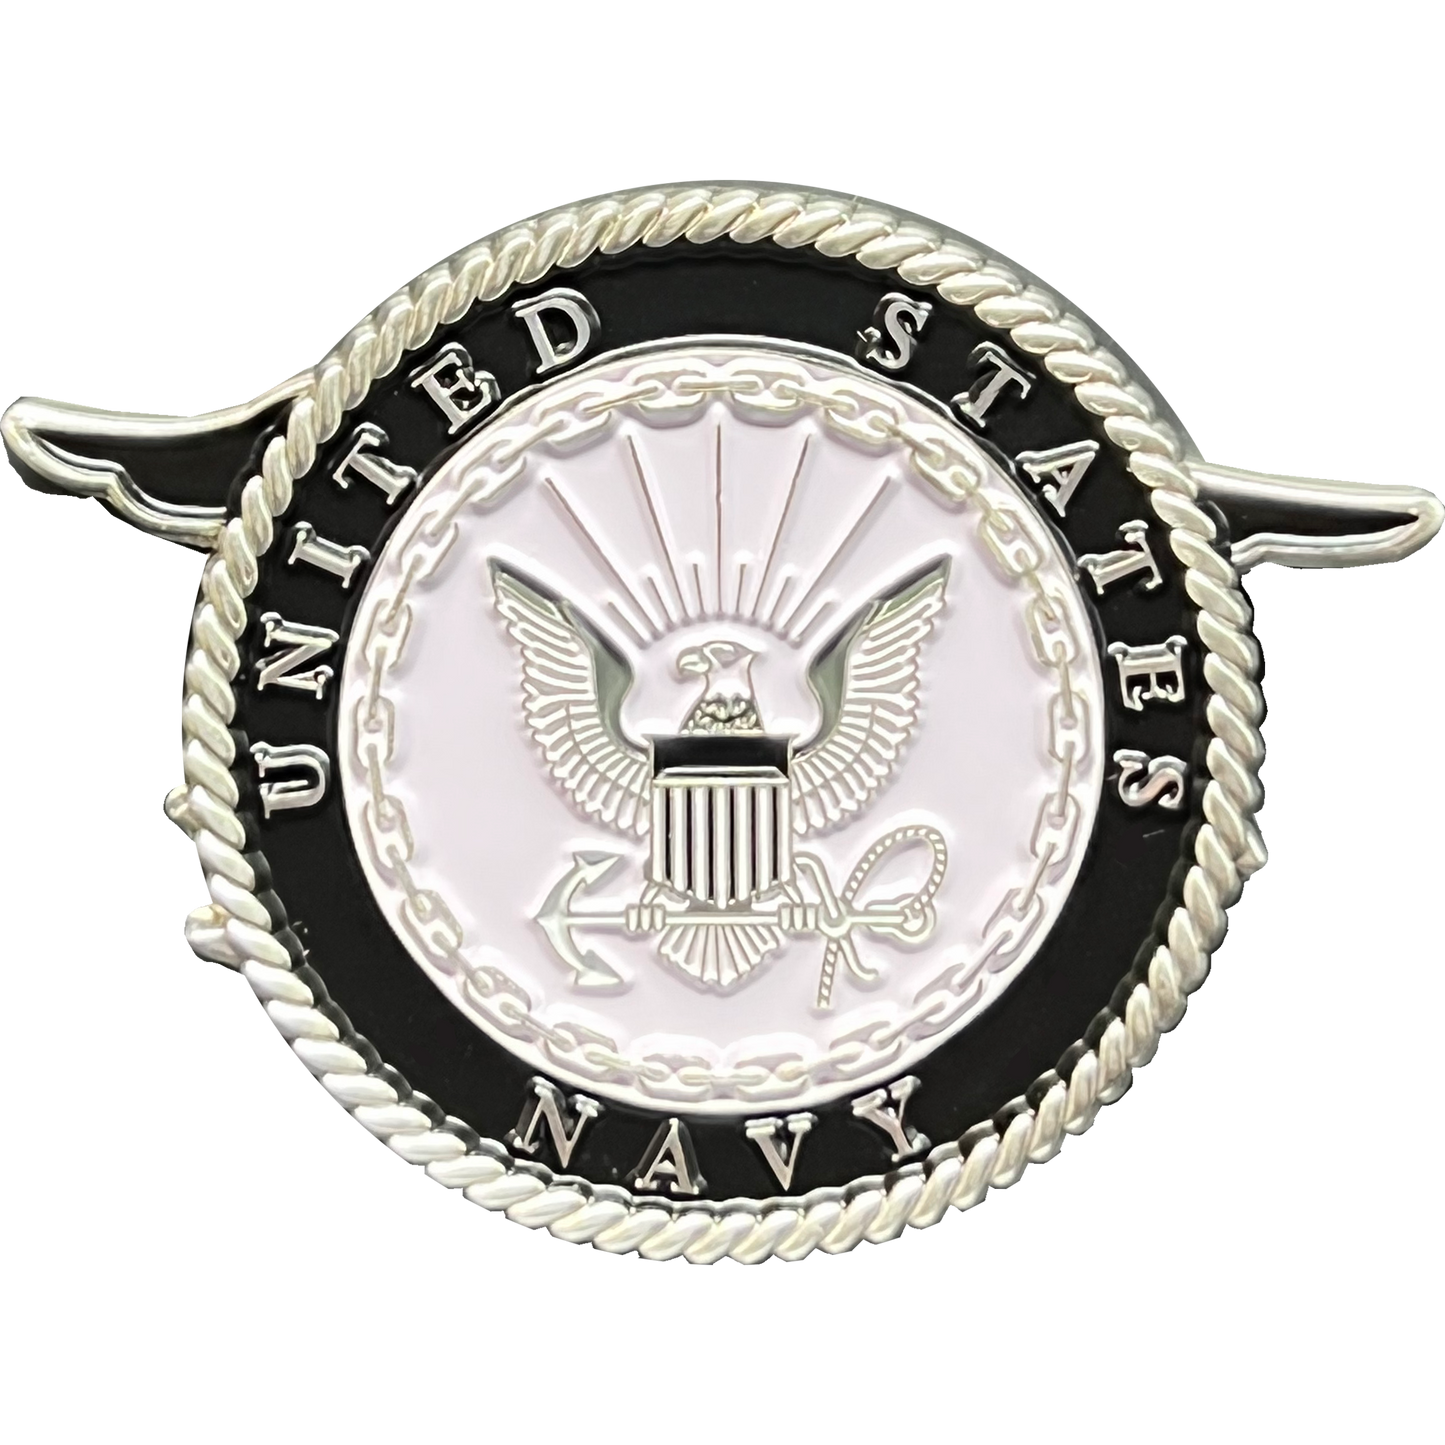 GL2-010 United States Navy Seals Trident Seal Team 6 USN Challenge Coin